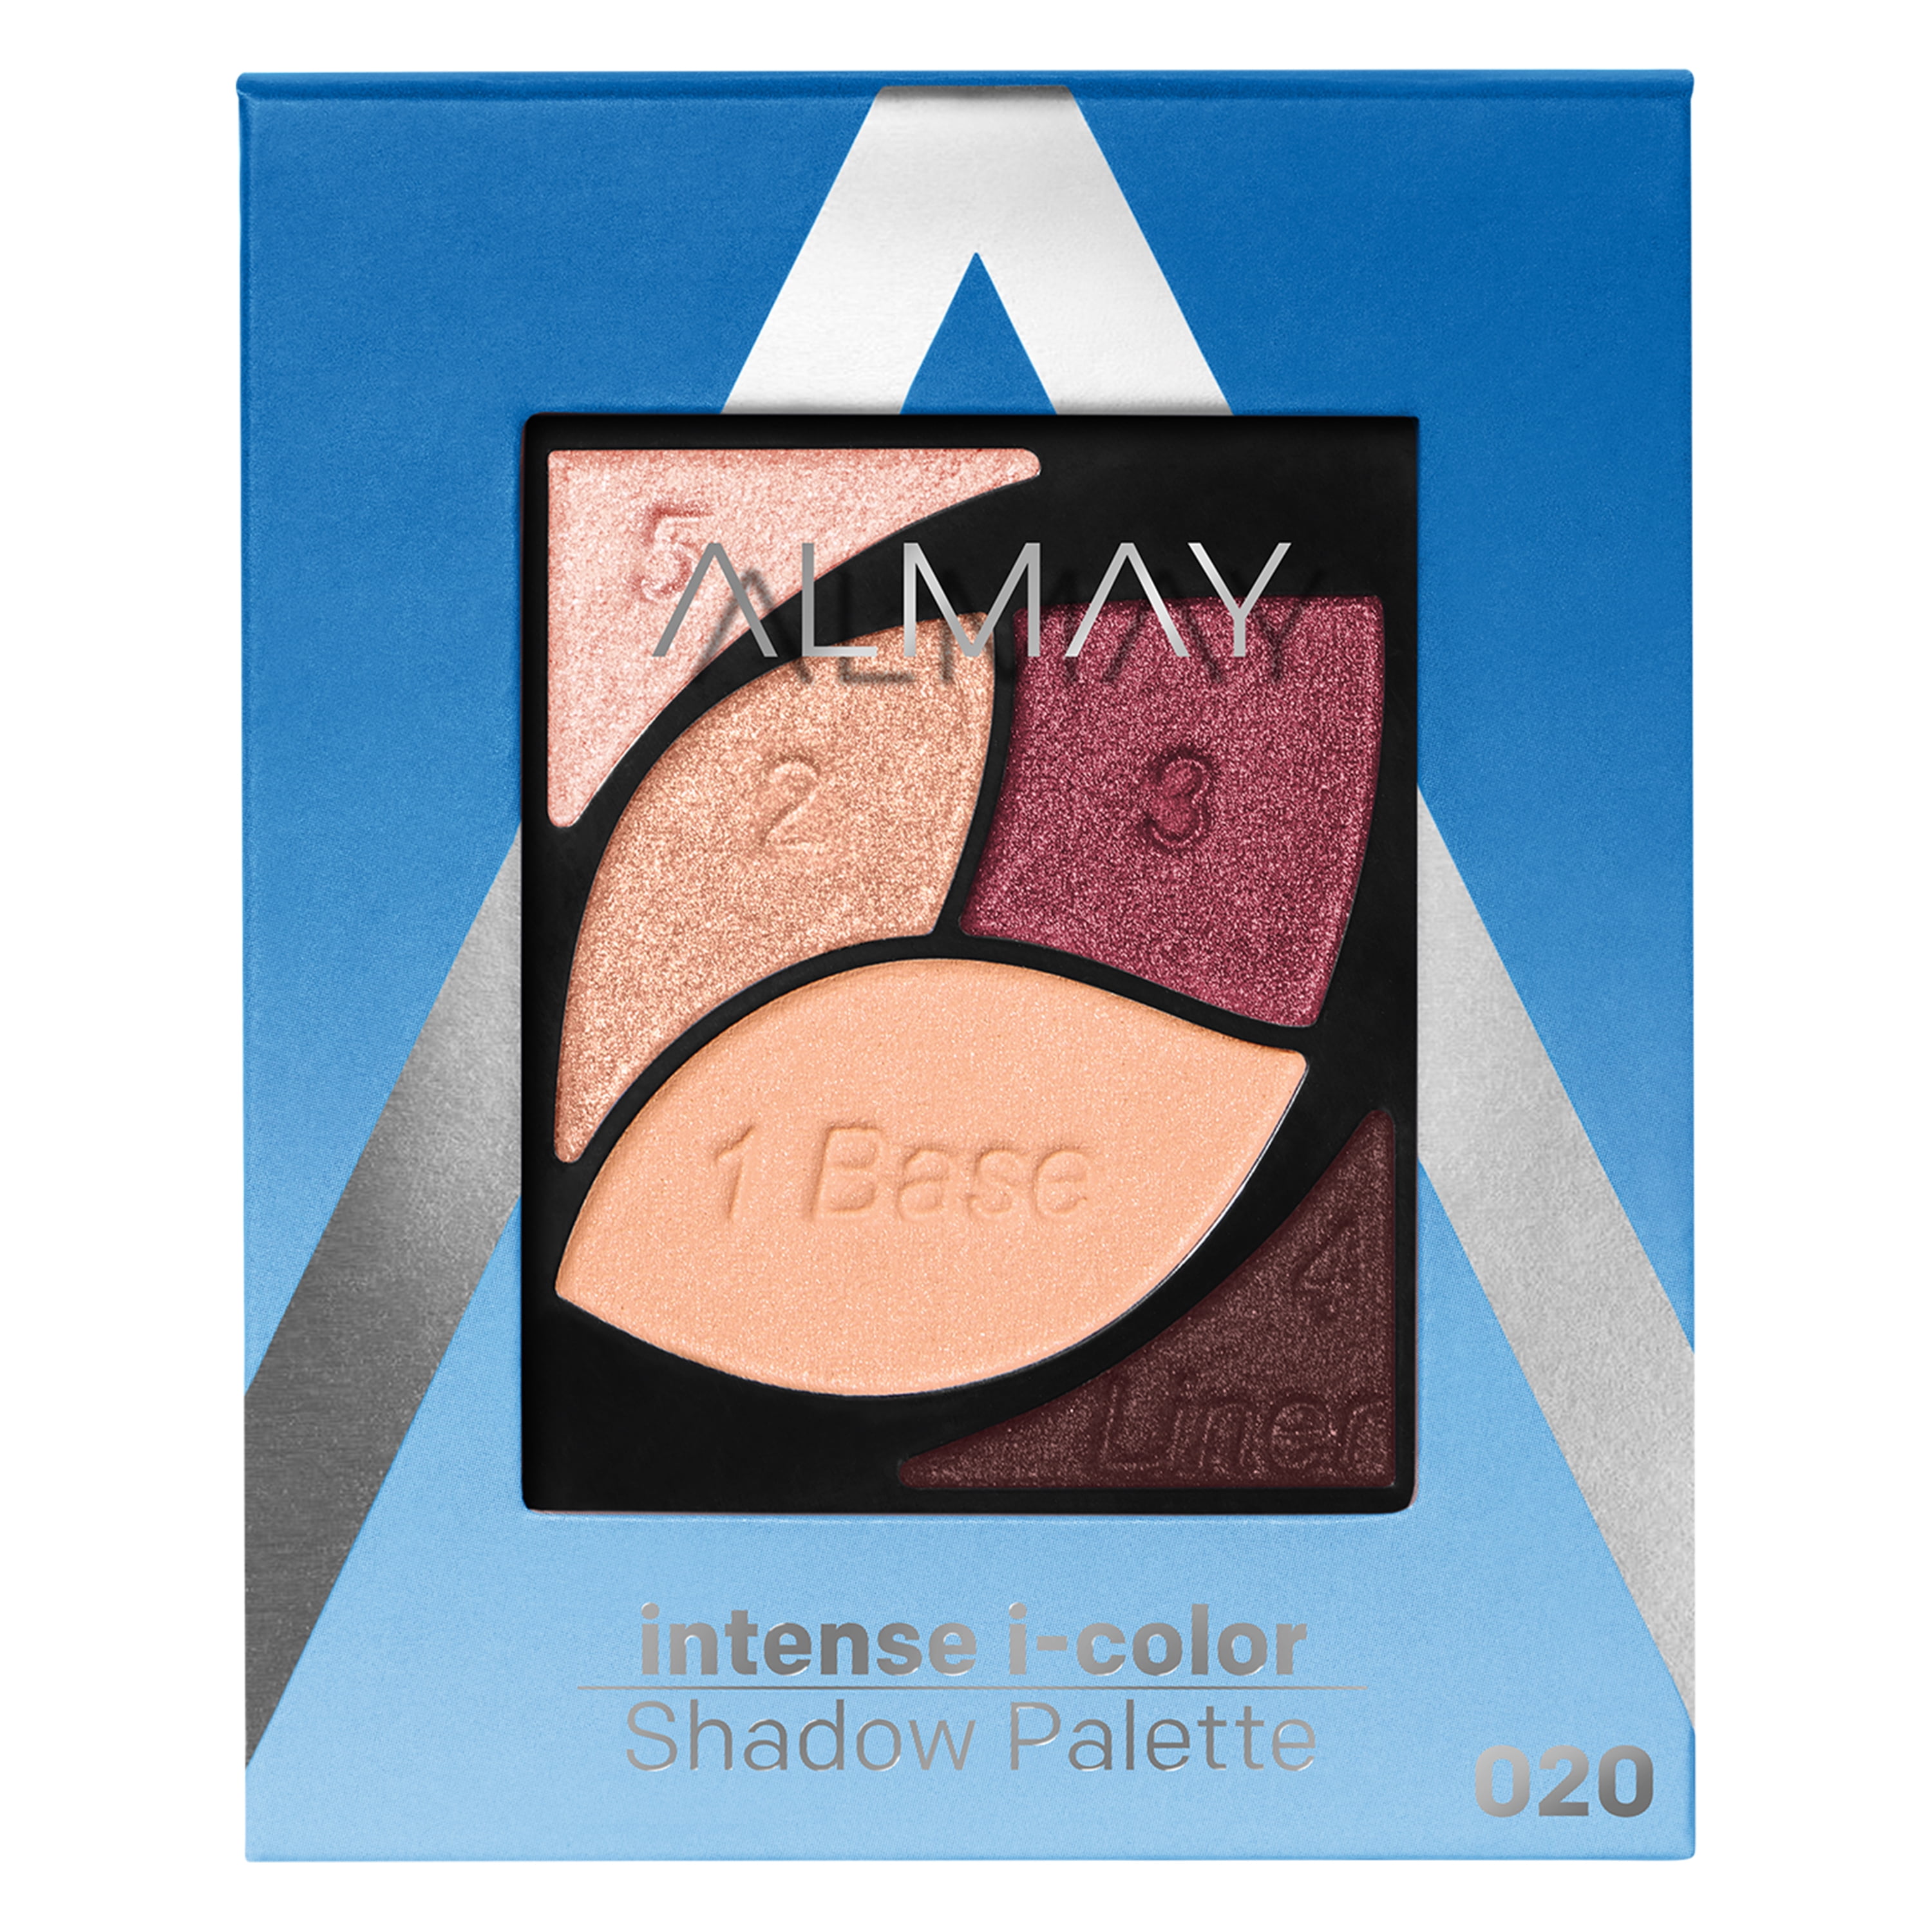 Almay Intense I-Color Enhancing Eyeshadow Palette, 020 Blue Eyes, 0.1 oz.